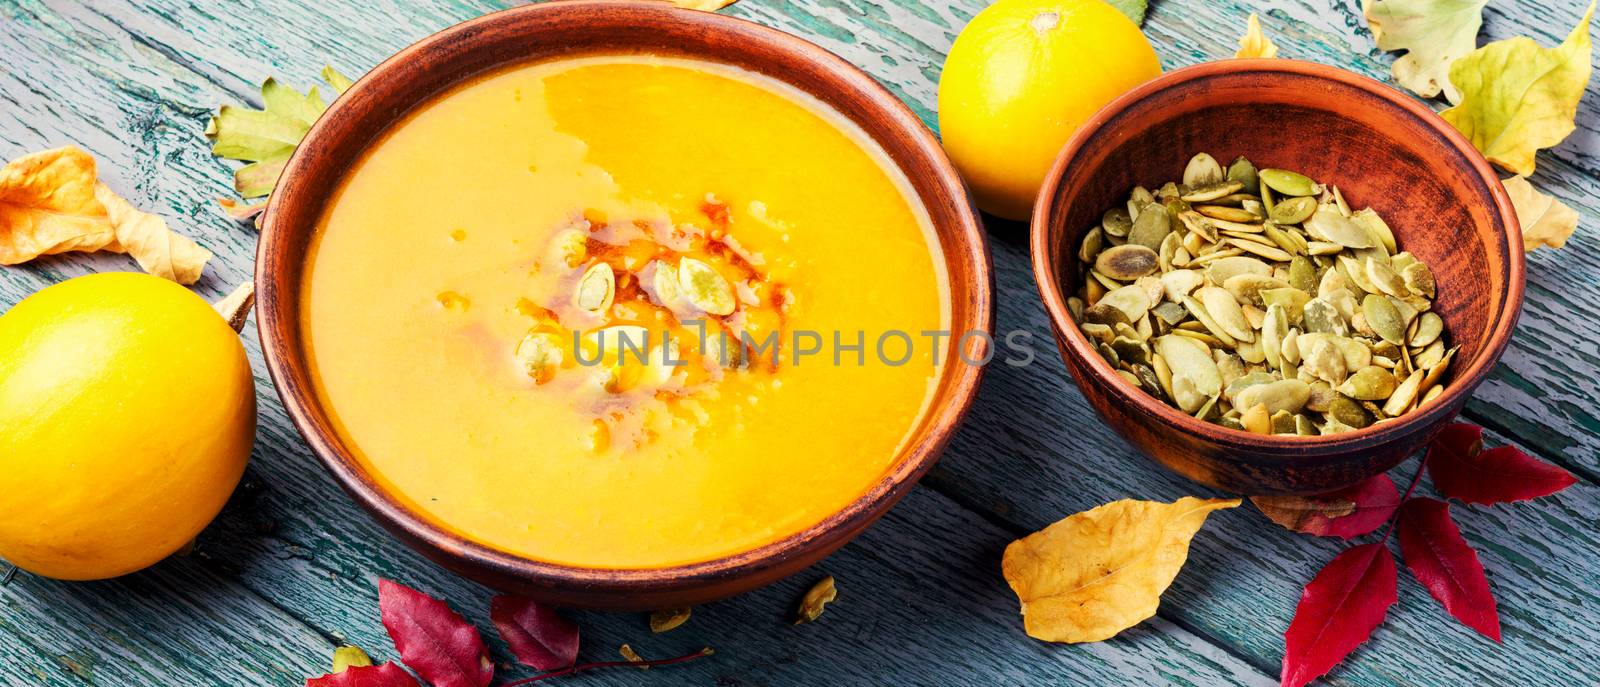 Autumn pumpkin soup by LMykola